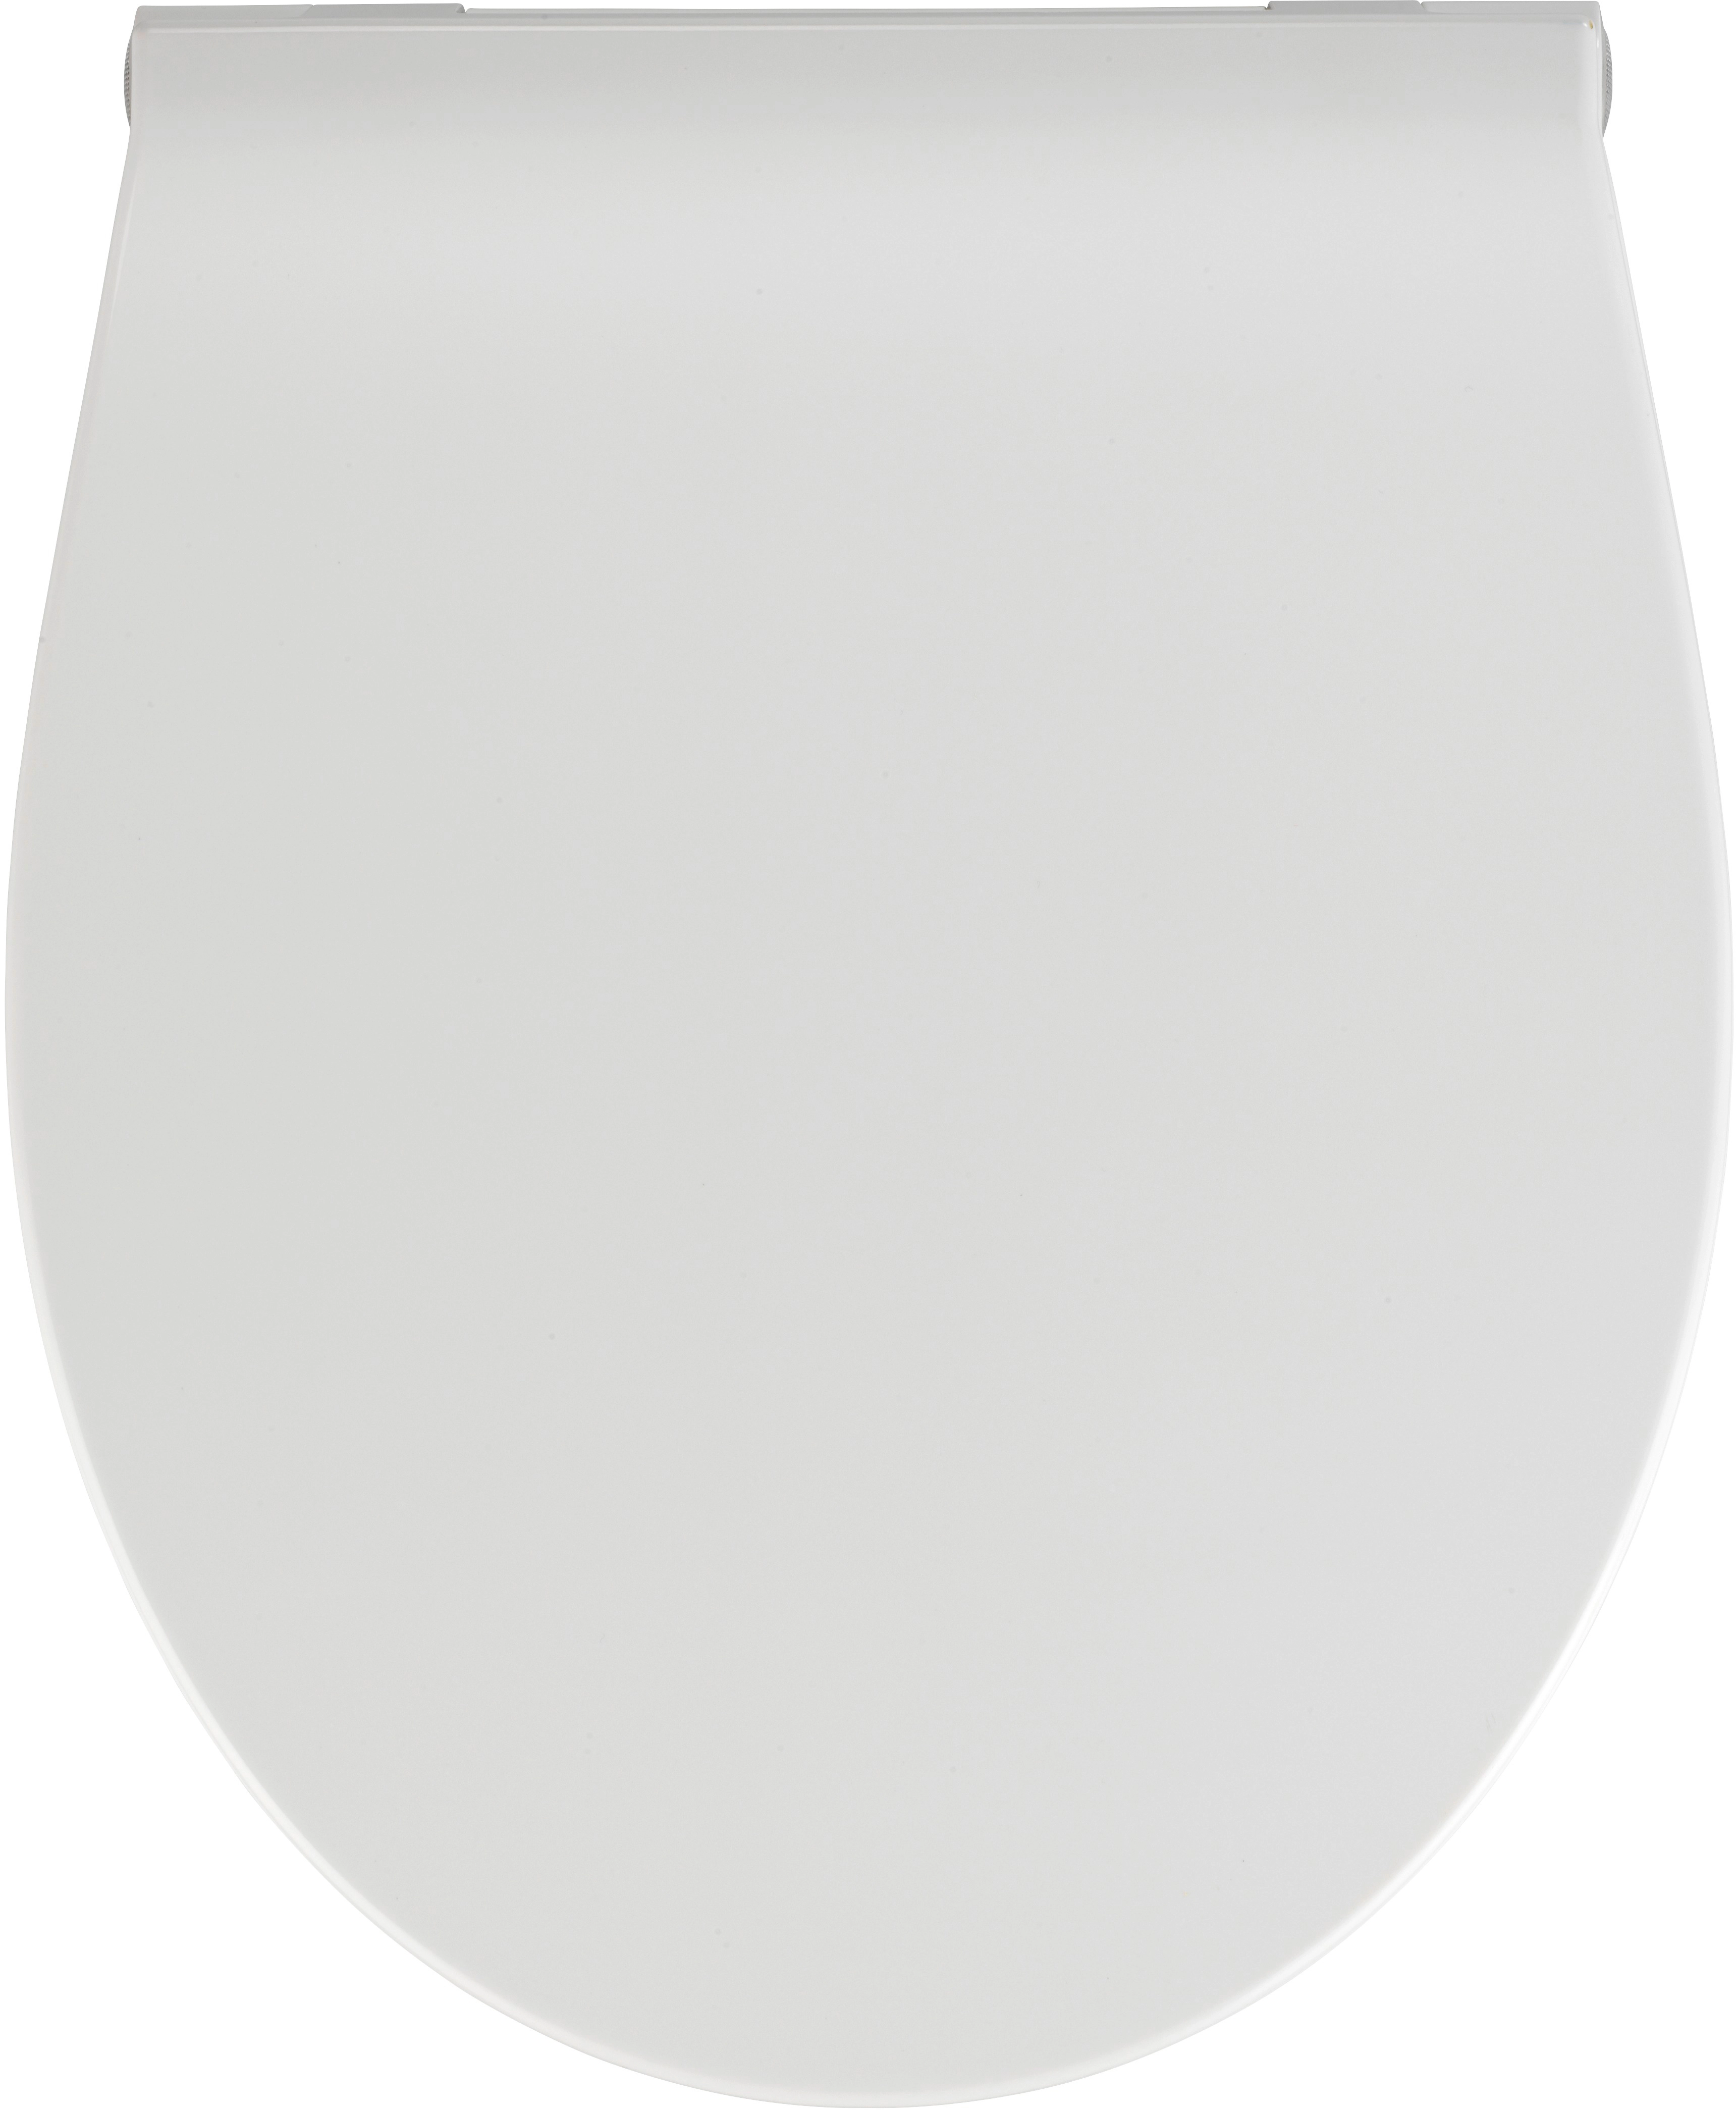 OBI bei LED kaufen WC-Sitz Akustiksensor Premium Weiß Wenko